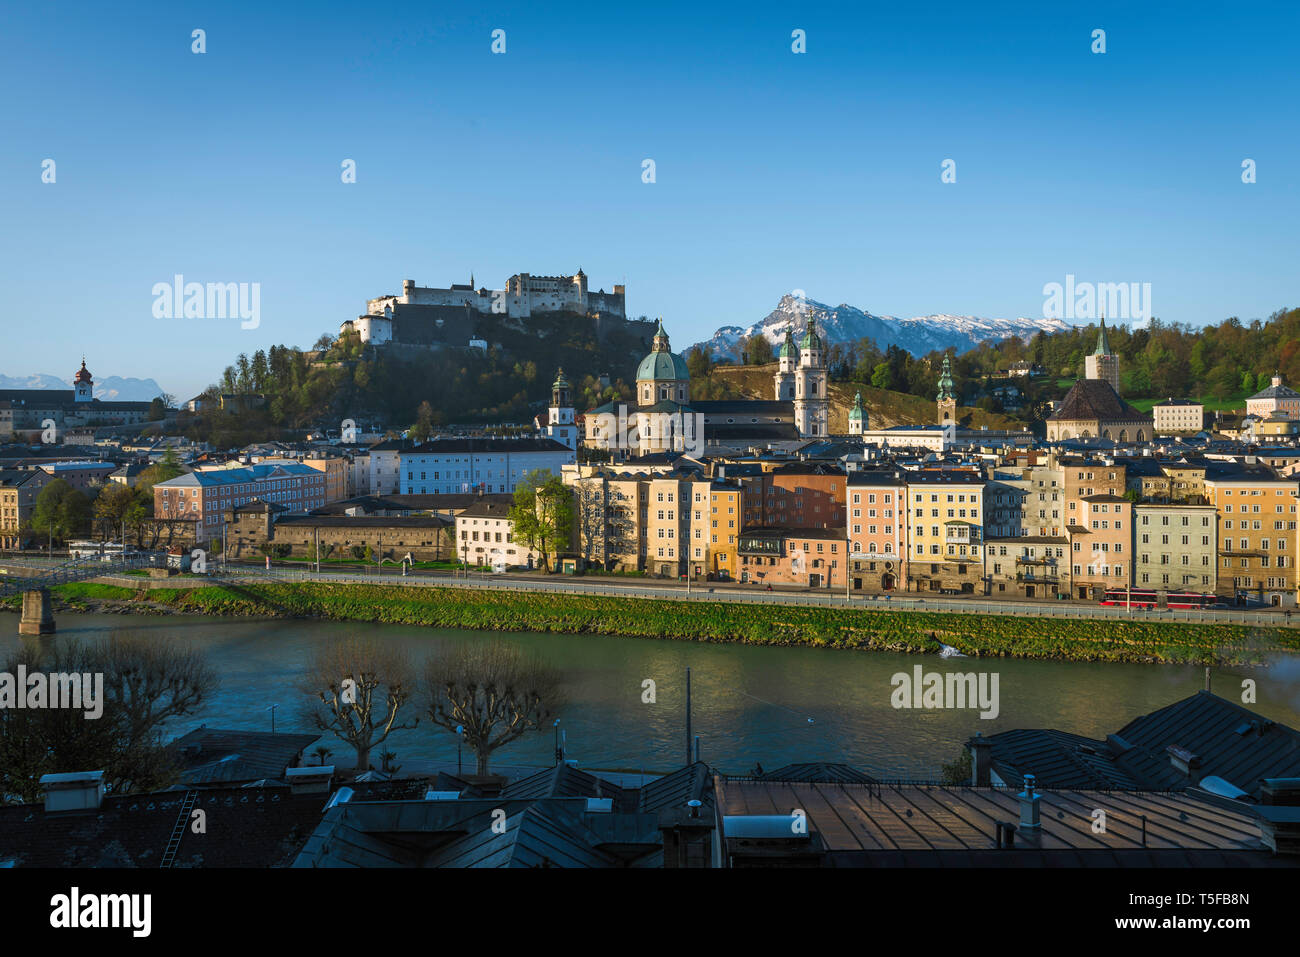 Salzburger Land, view of the historic Old Town quarter and hill-top castle (Festung Hohensalzburg) of Salzburg, Austria. Stock Photo